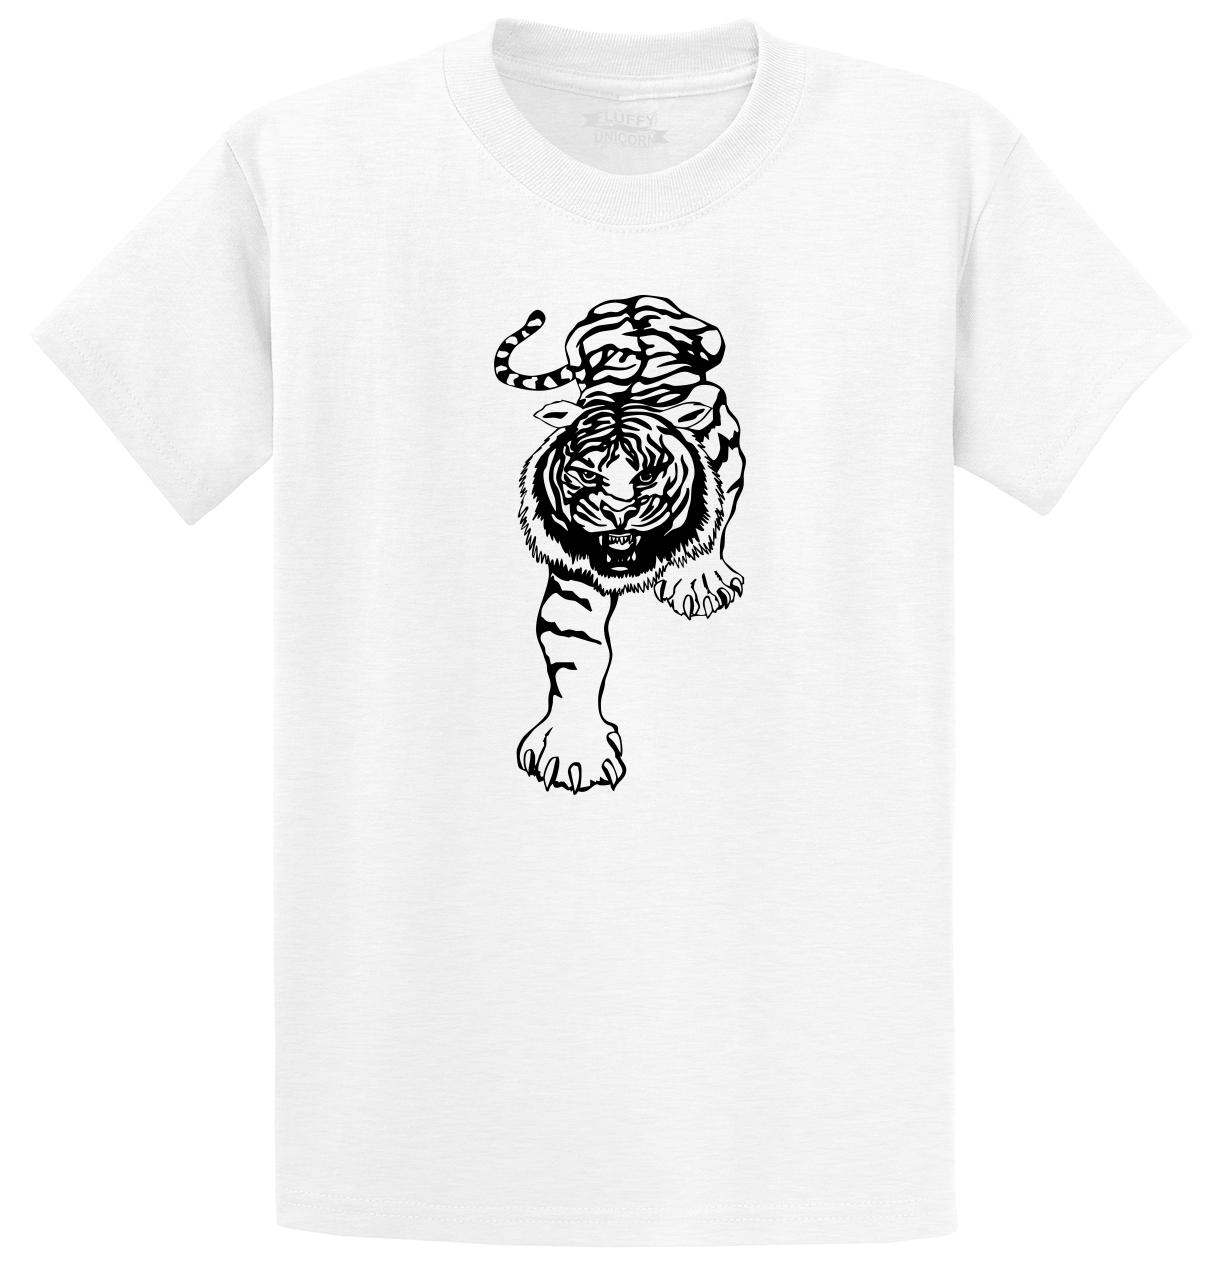 Running Tiger T Shirt Animal Graphic Tee Tiger Lover Tee Shirt